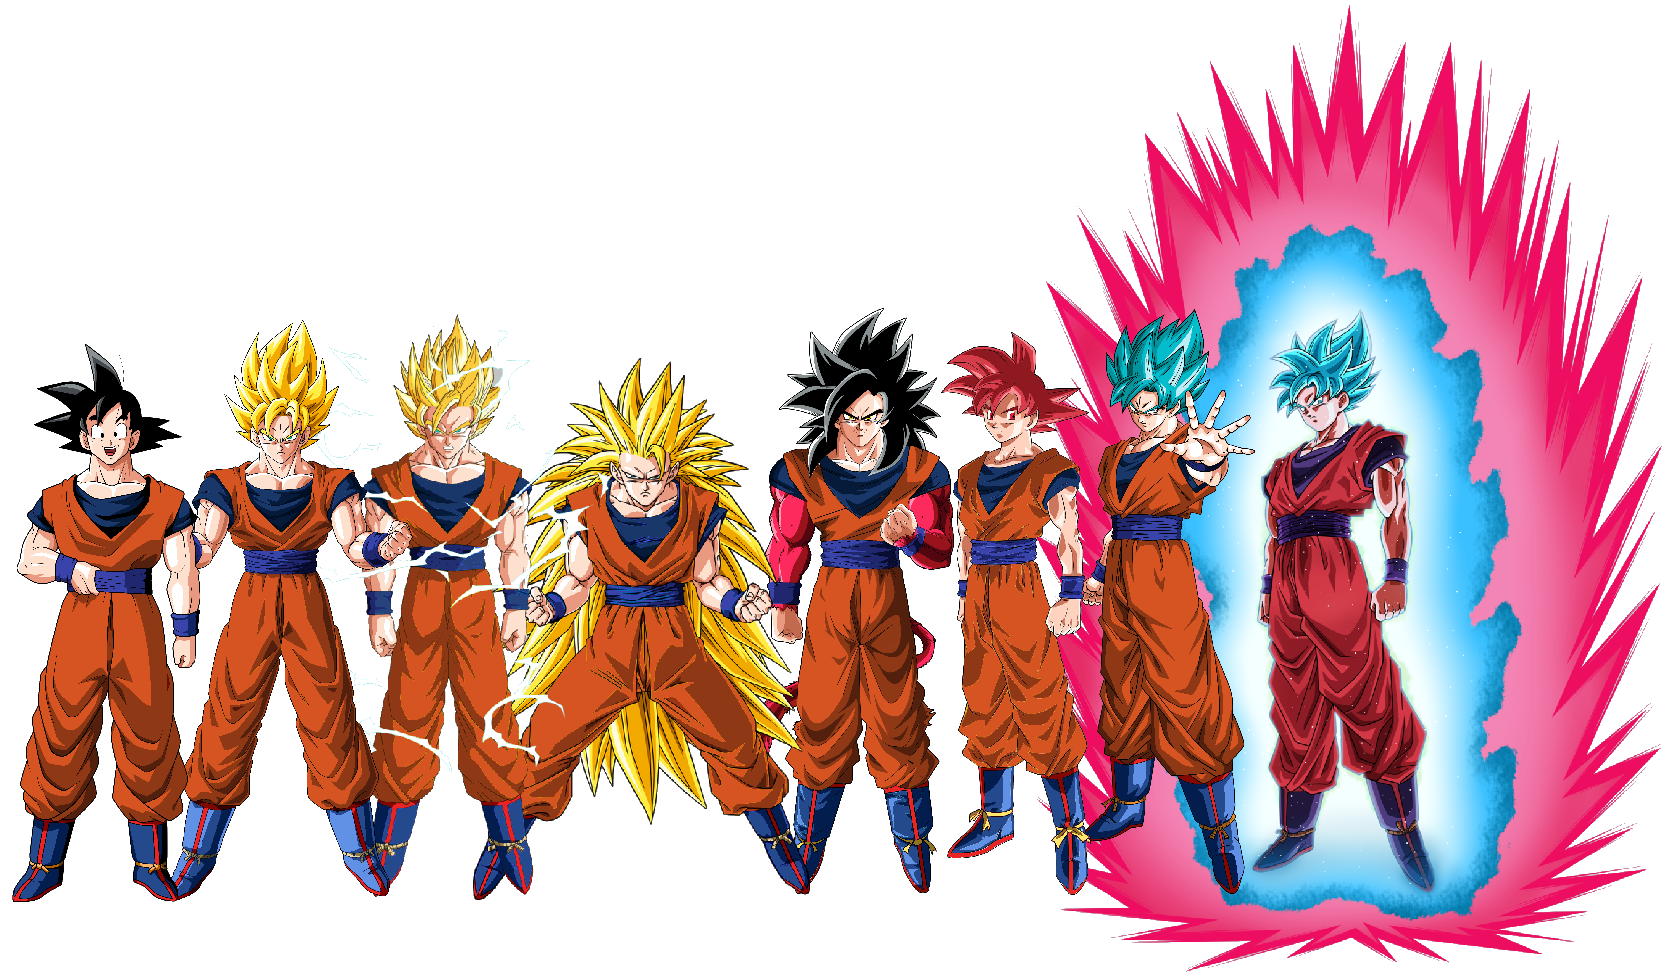 Goku S Transformations Anime Dragon Ball Super Dragon Ball Super Hot